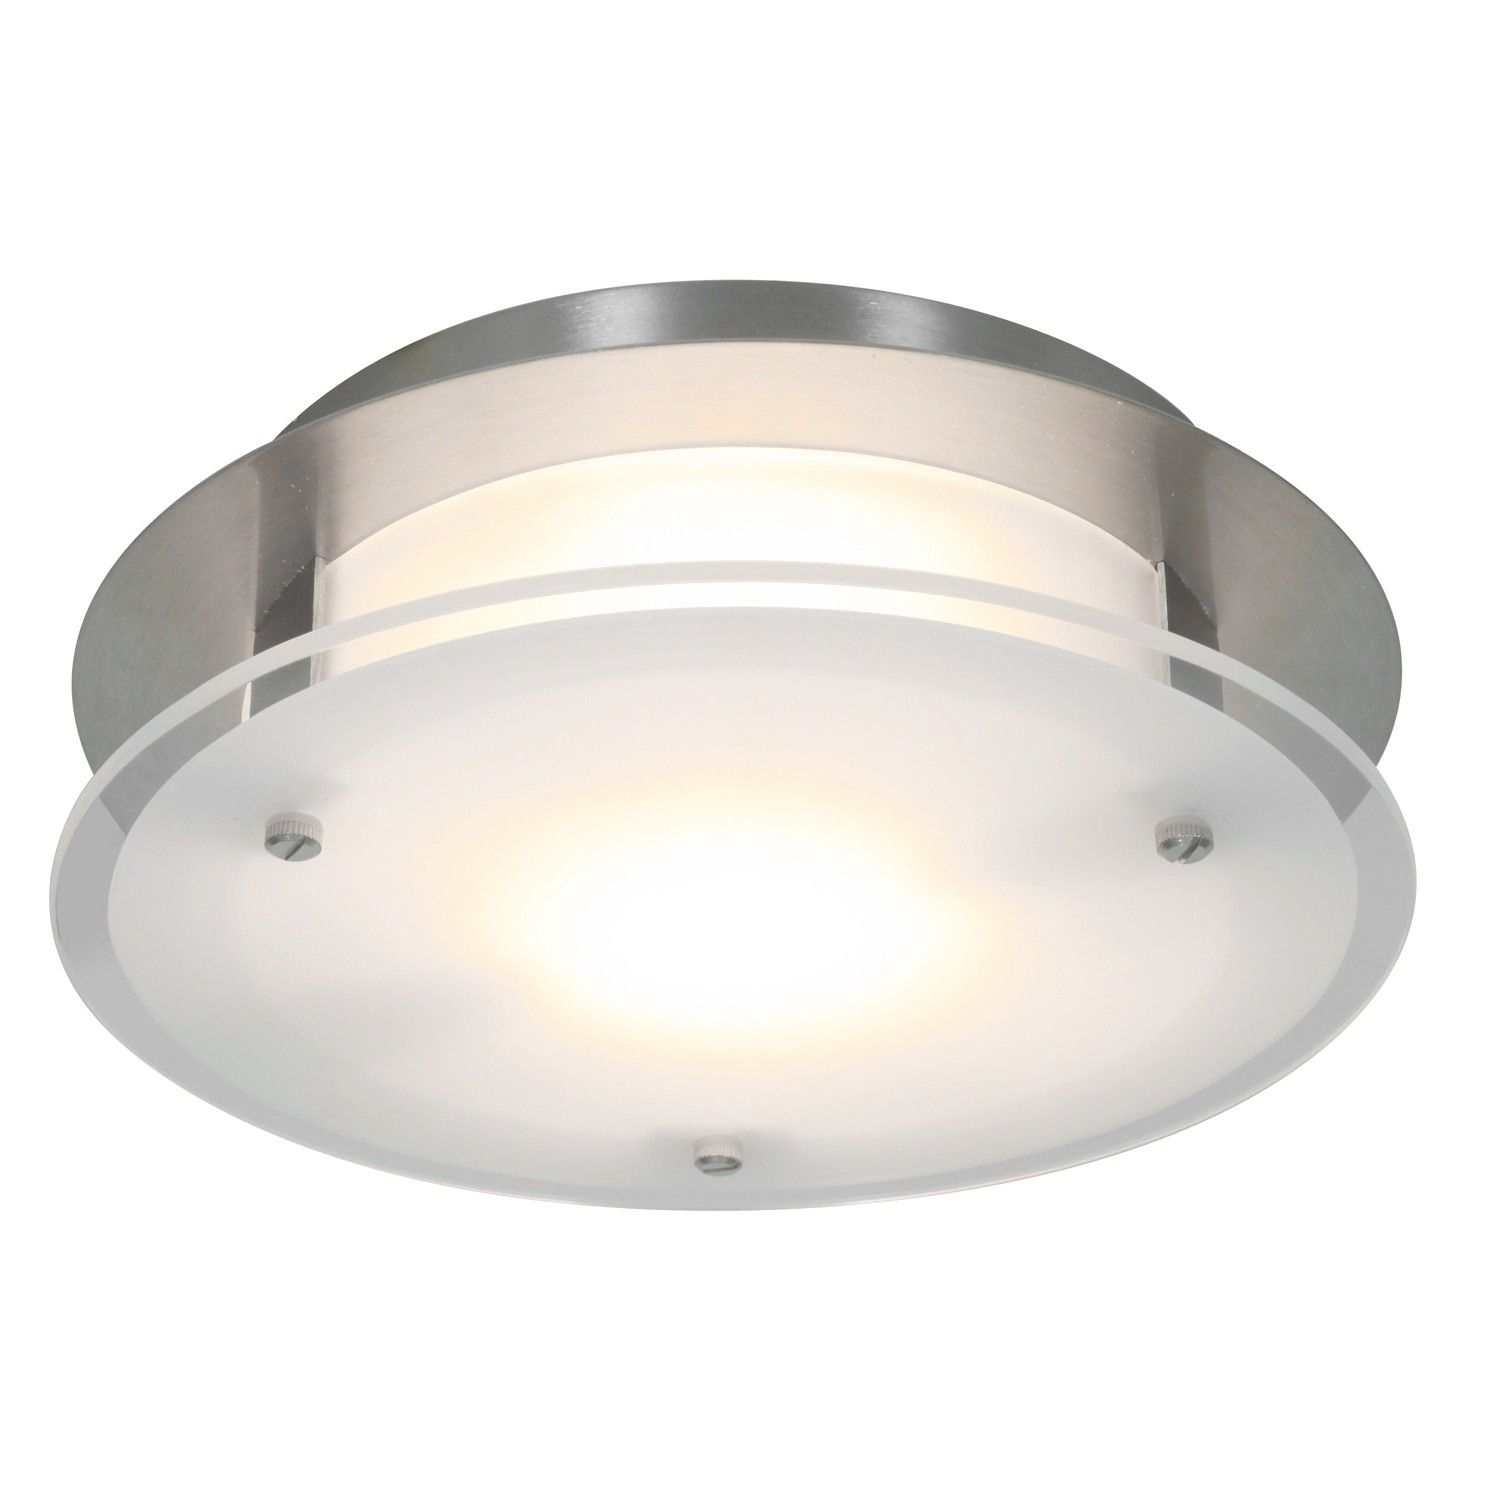 Luxury Ductless Bathroom Fan With Light Bathroom Fan Light with regard to size 1500 X 1500